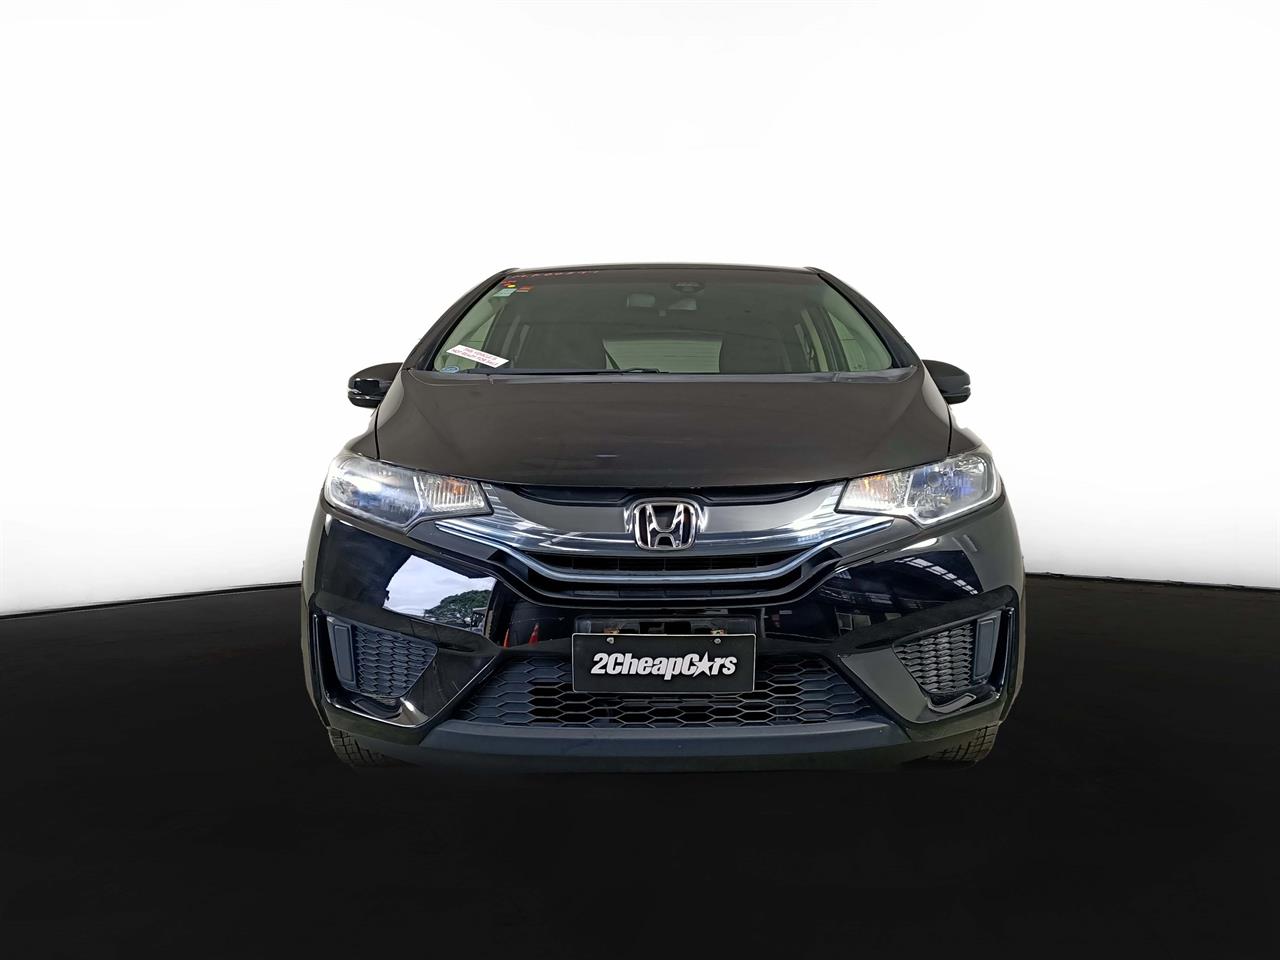 2013 Honda Fit Jazz Hybrid Late Shape